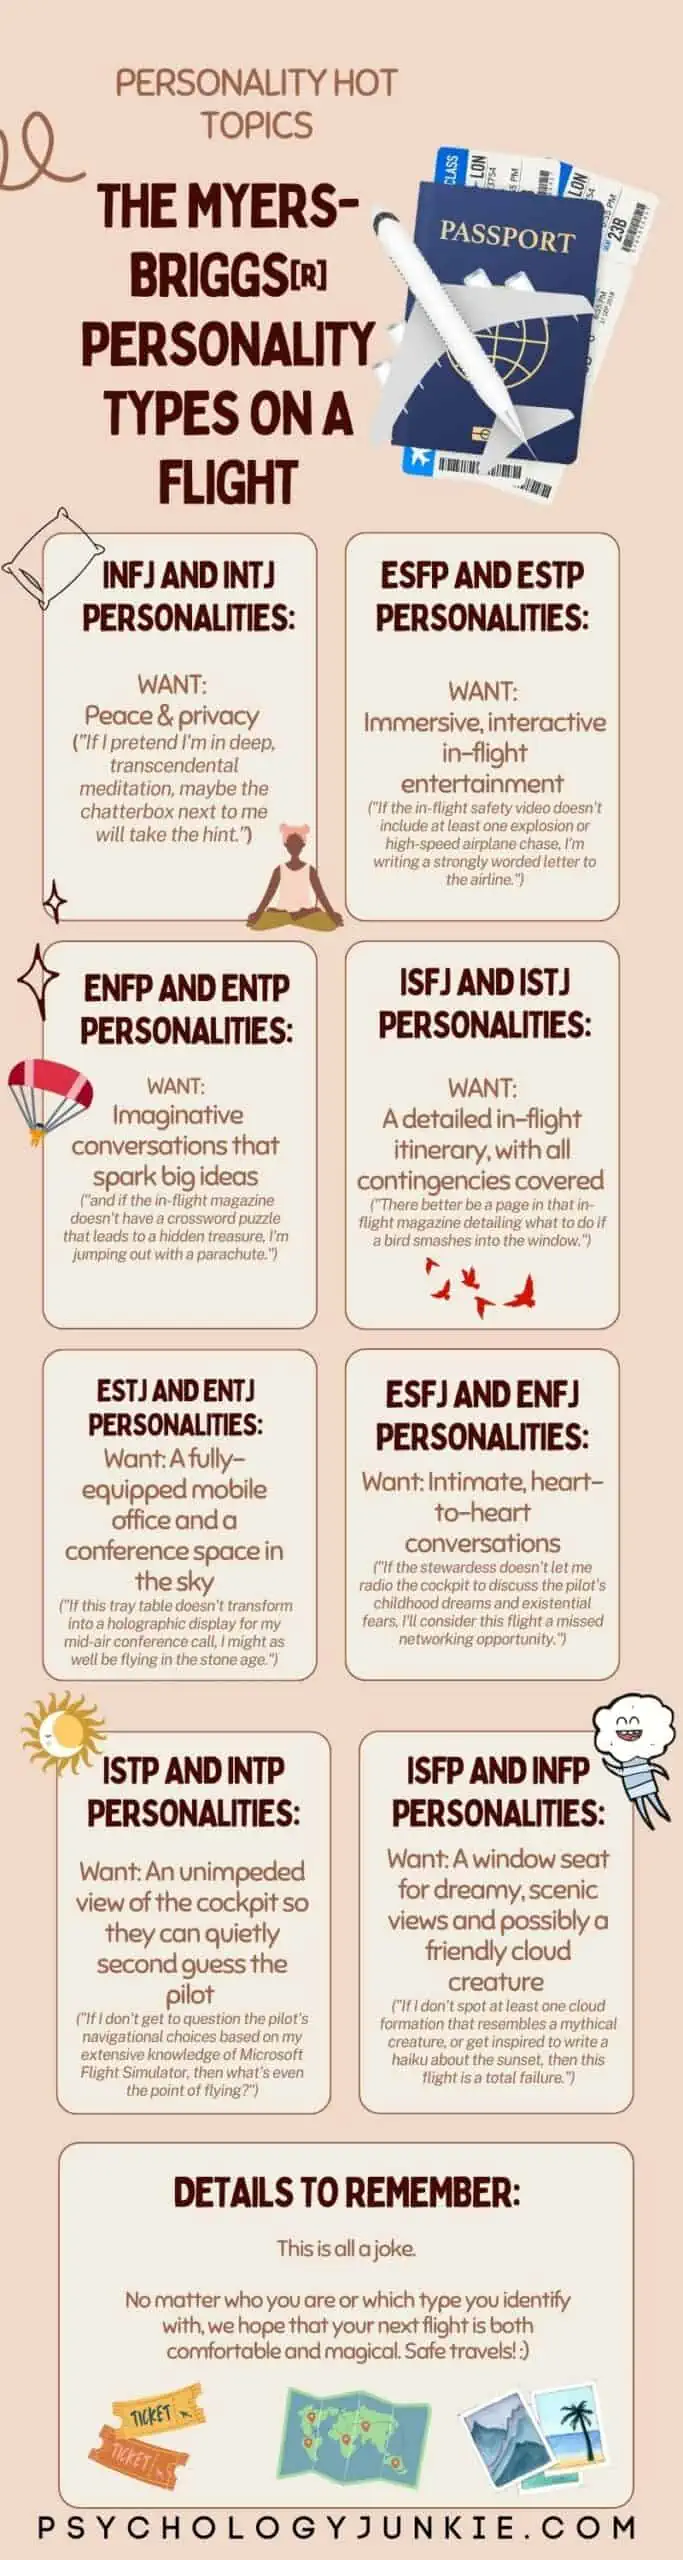 Rush MBTI Personality Type: ESTP or ESTJ?